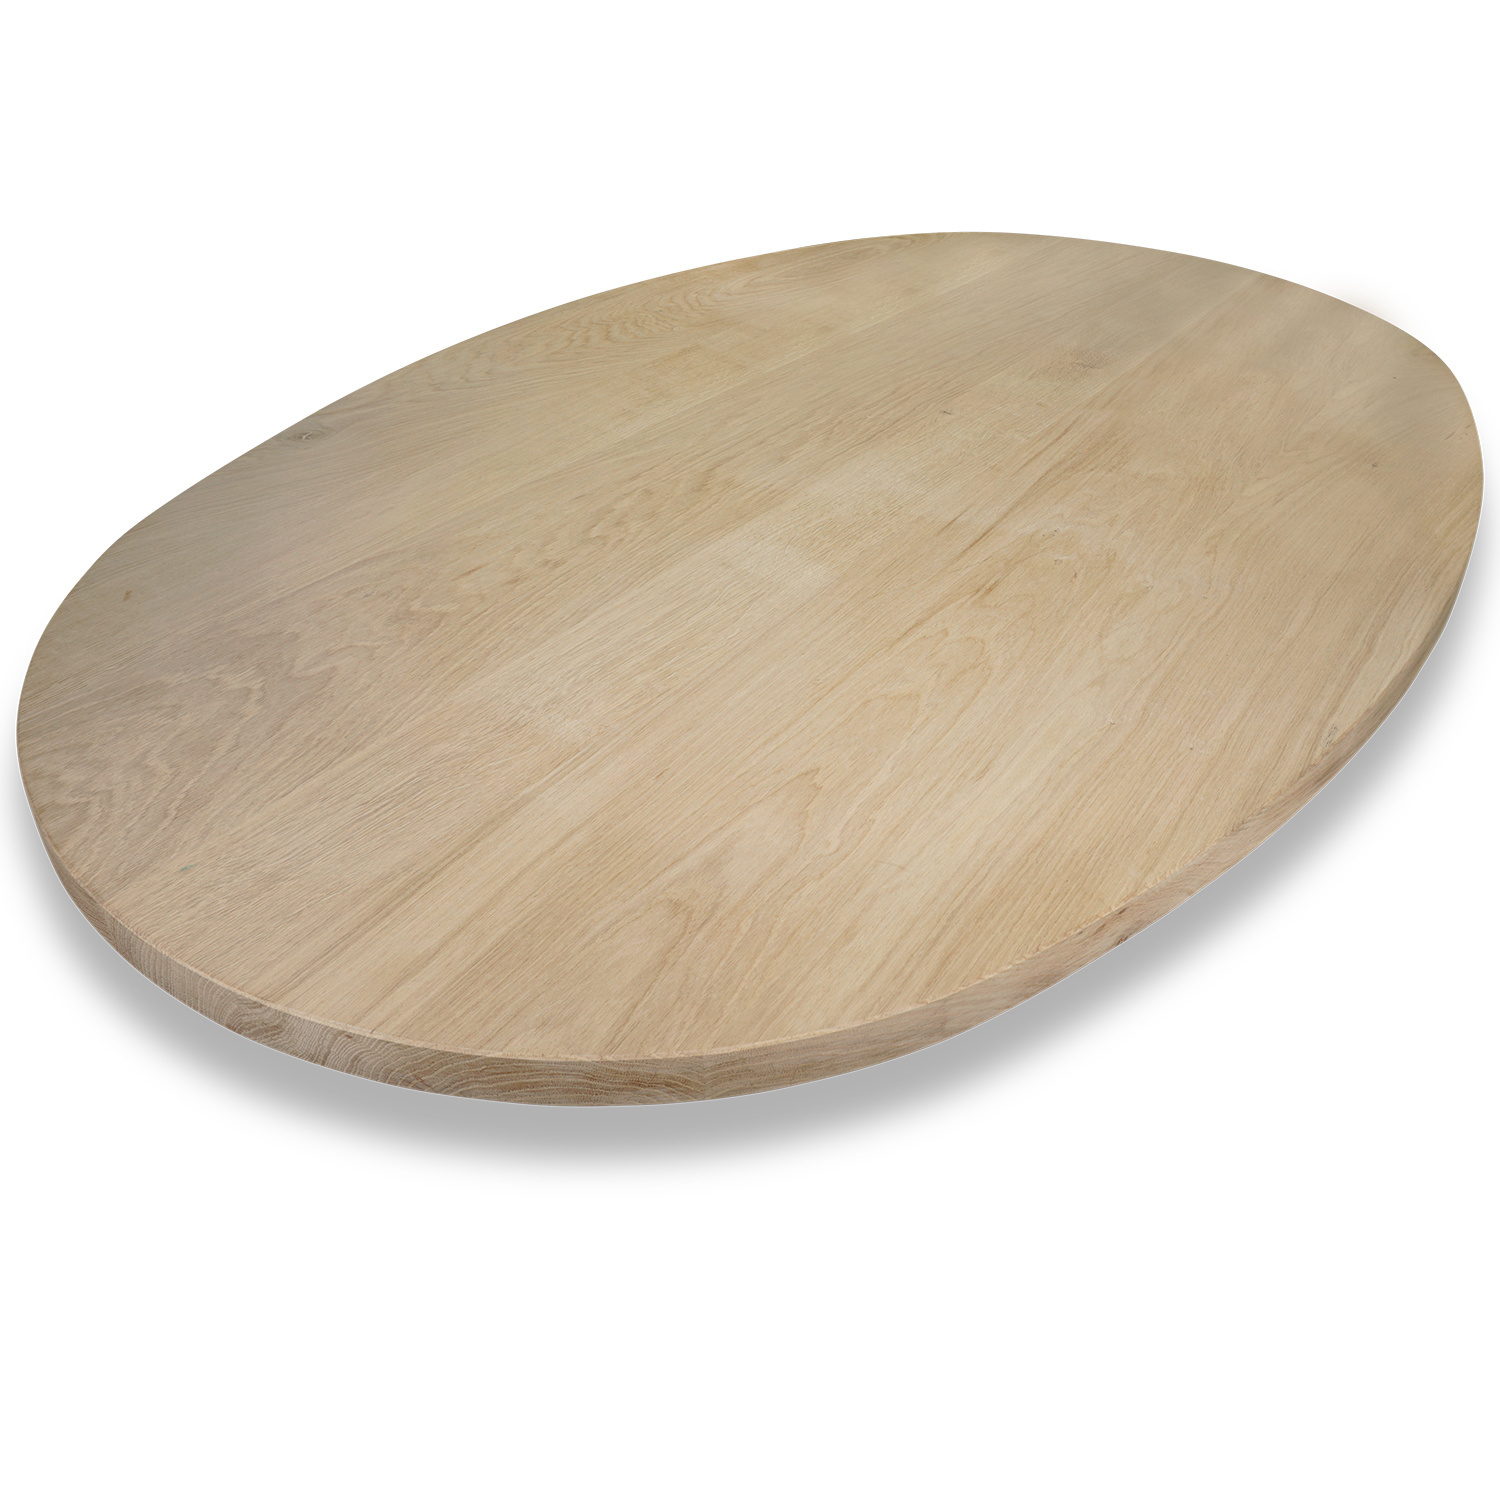  Ovaal eiken tafelblad - 4 cm dik (1-laag) - foutvrij Europees eikenhout - tafelblad ellips / ovaal - kd 8-12%